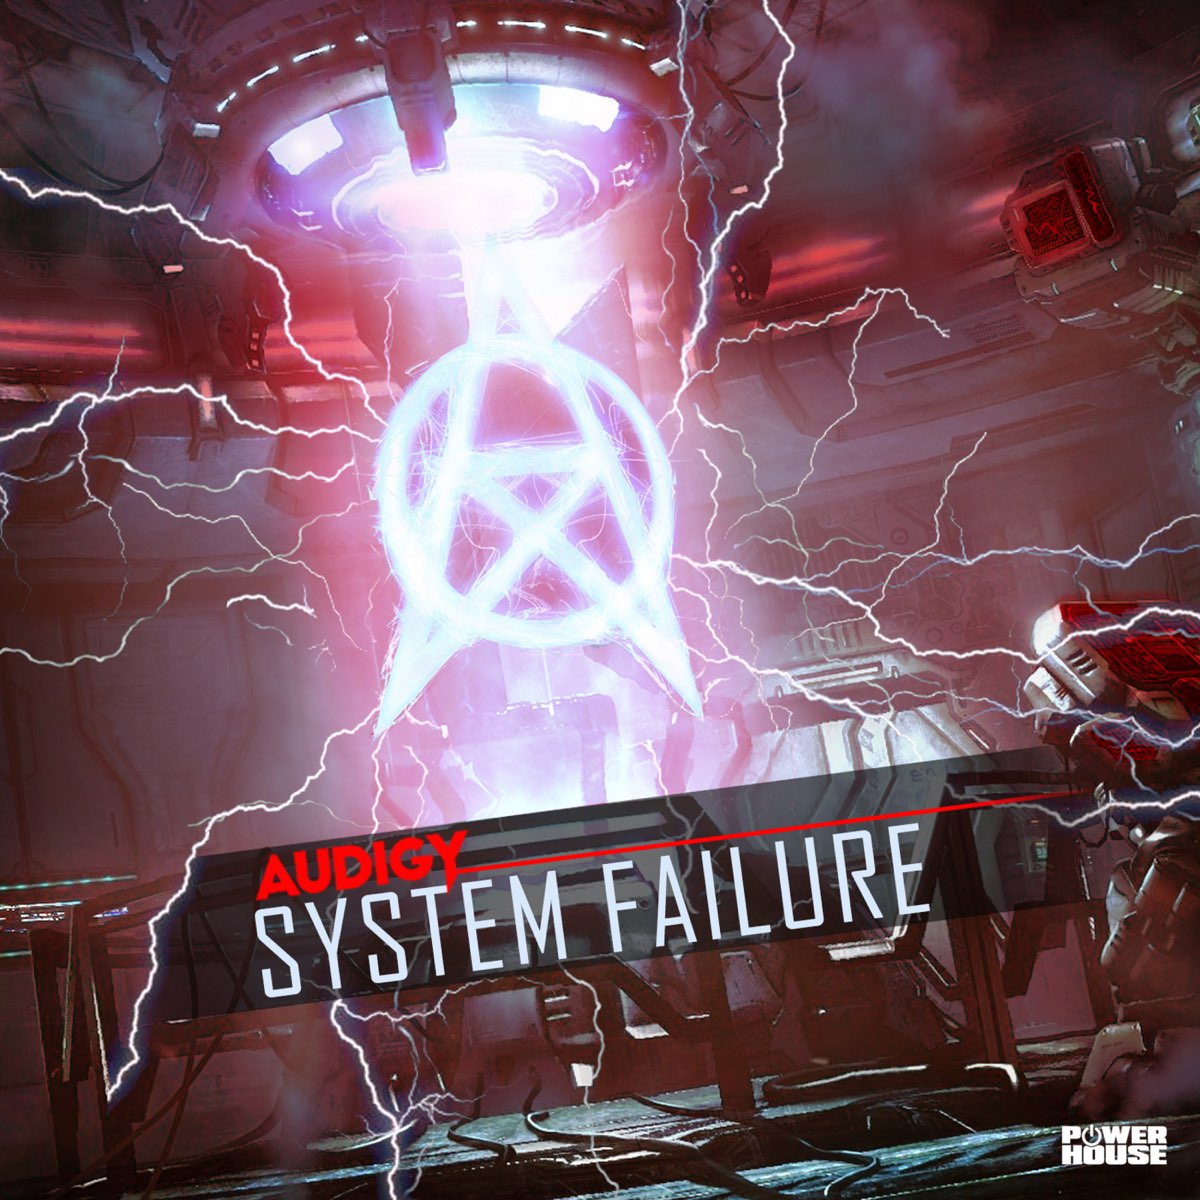 Your system failed. System failure.